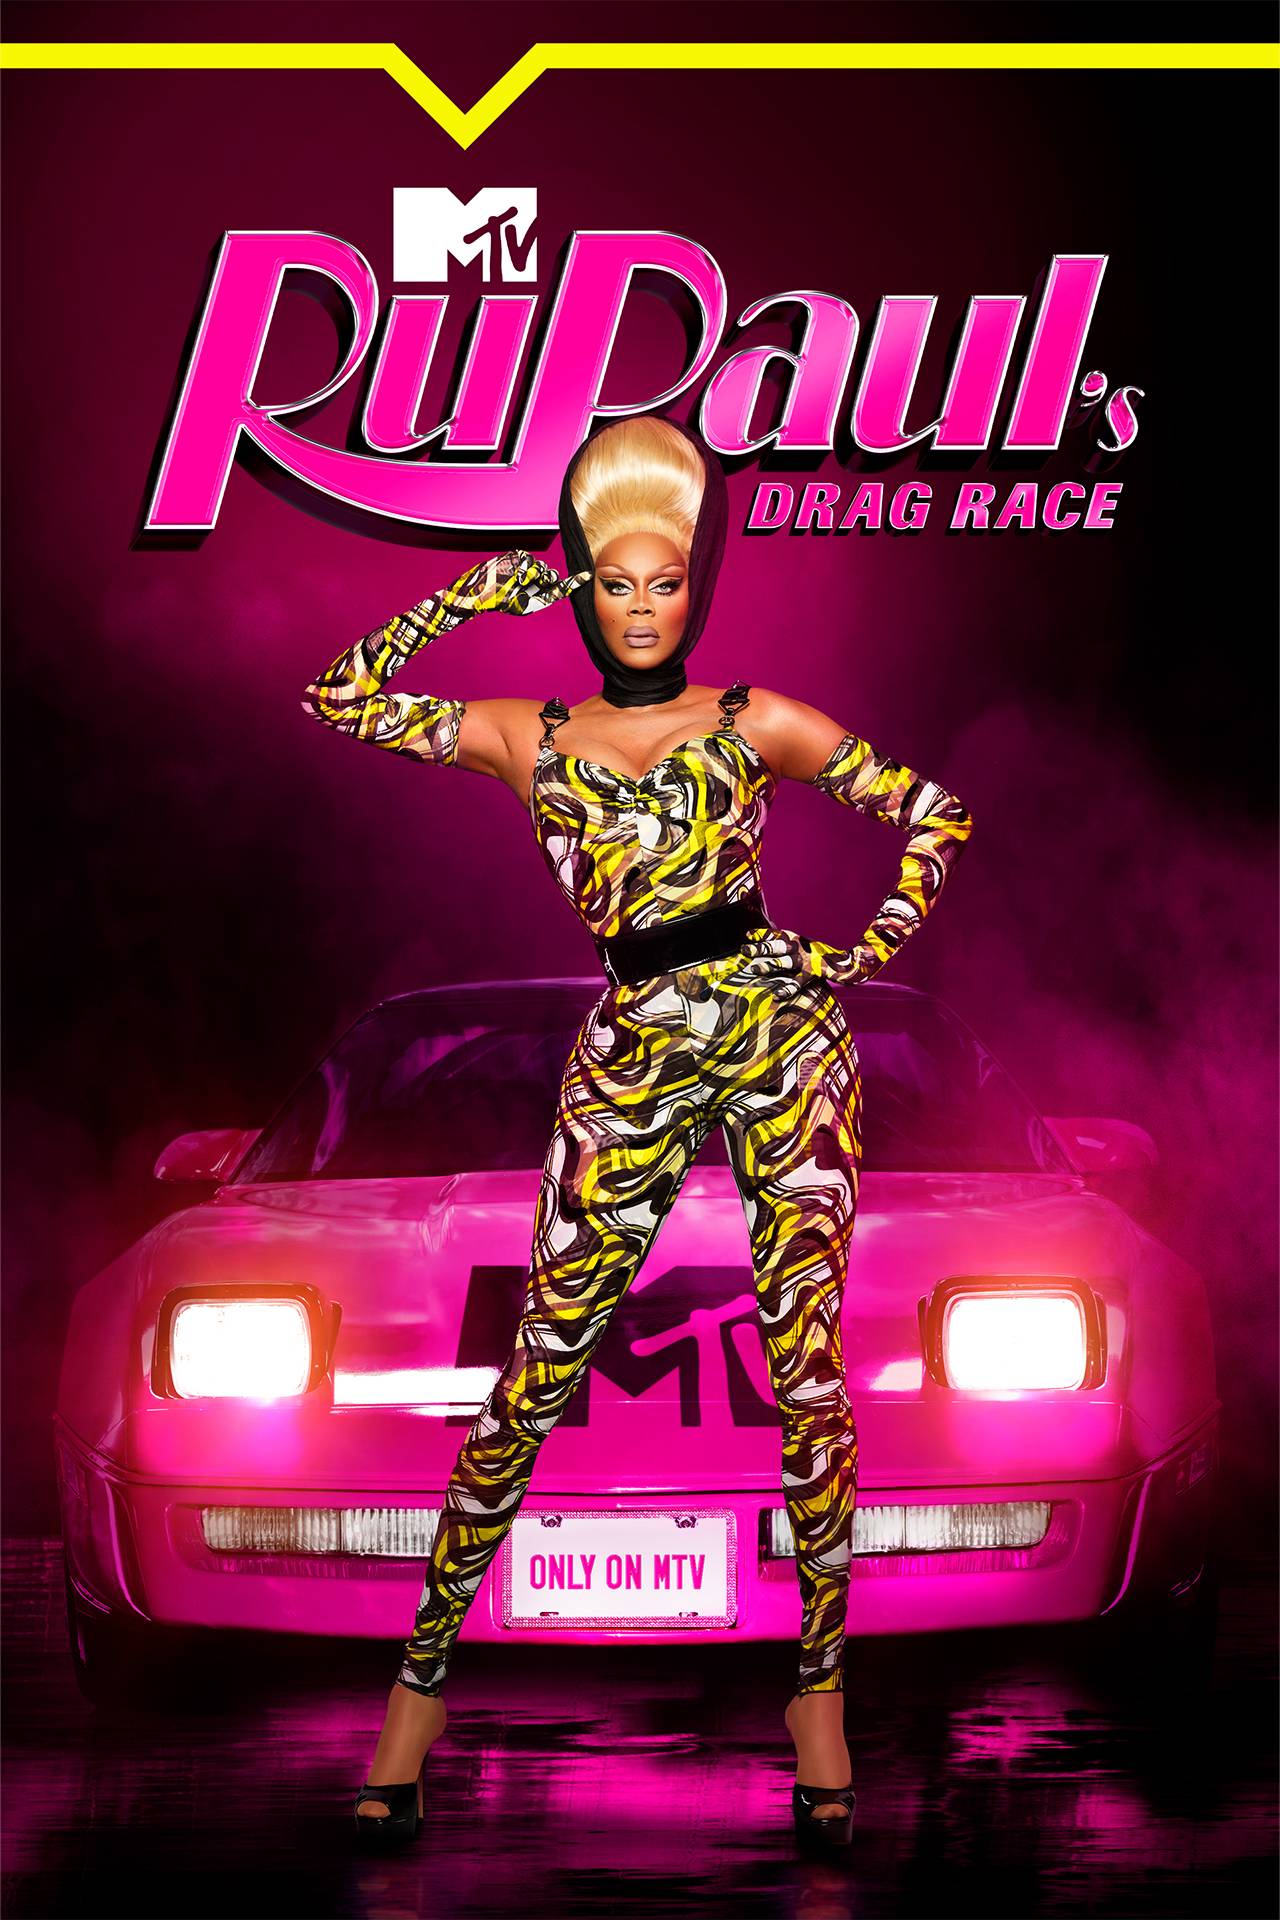 Rupaul’s Drag Race Season 15